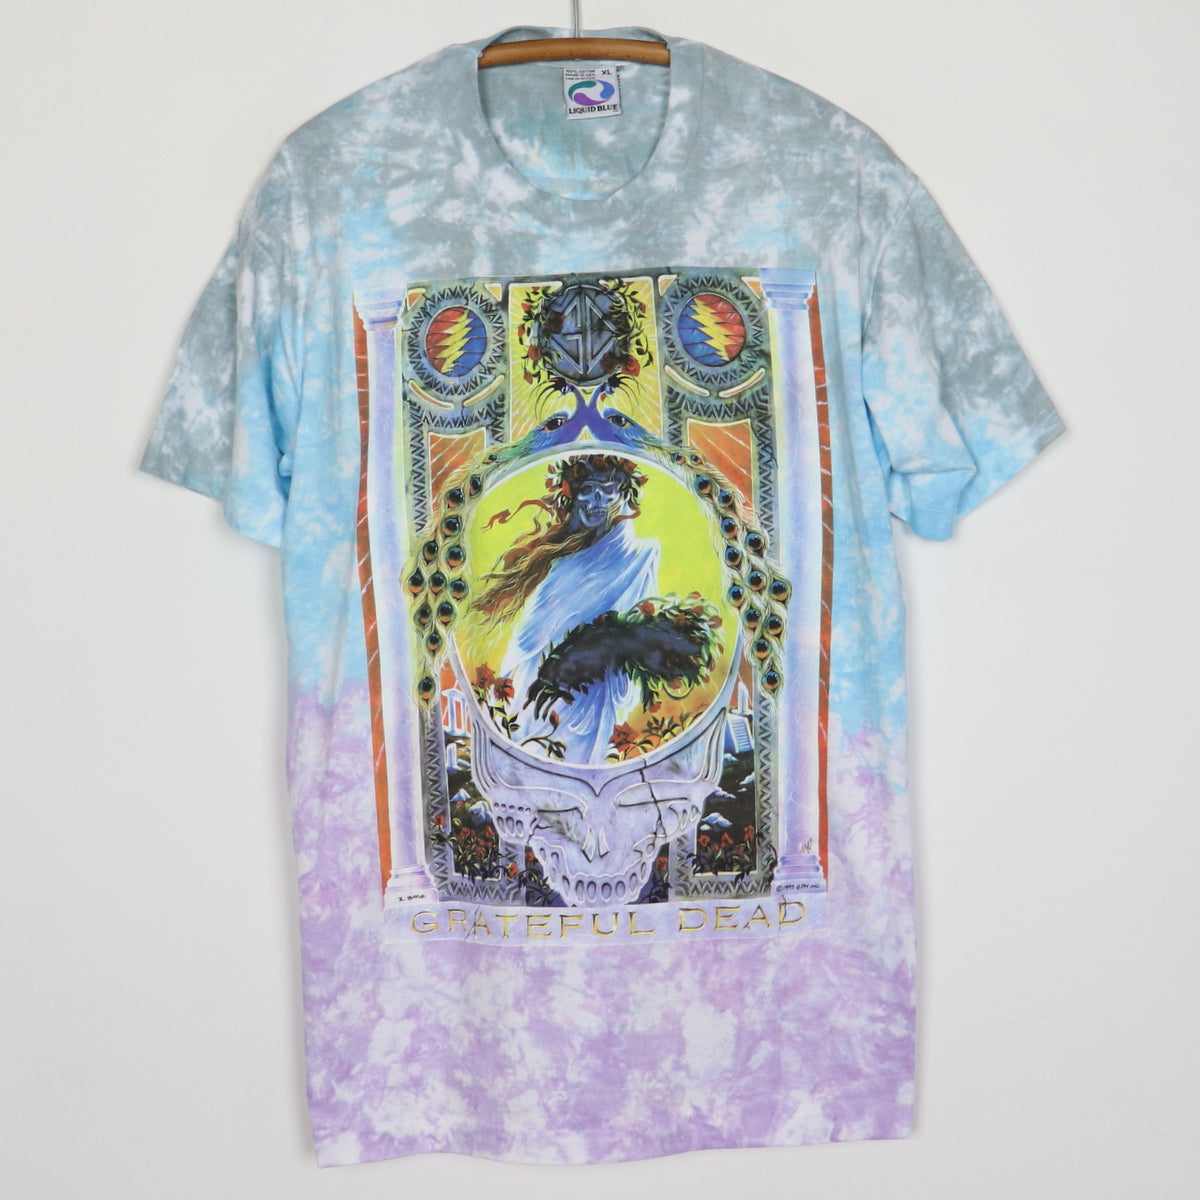 1995 Grateful Dead 30th Anniversary Tour Liquid Blue Tie Dye Shirt